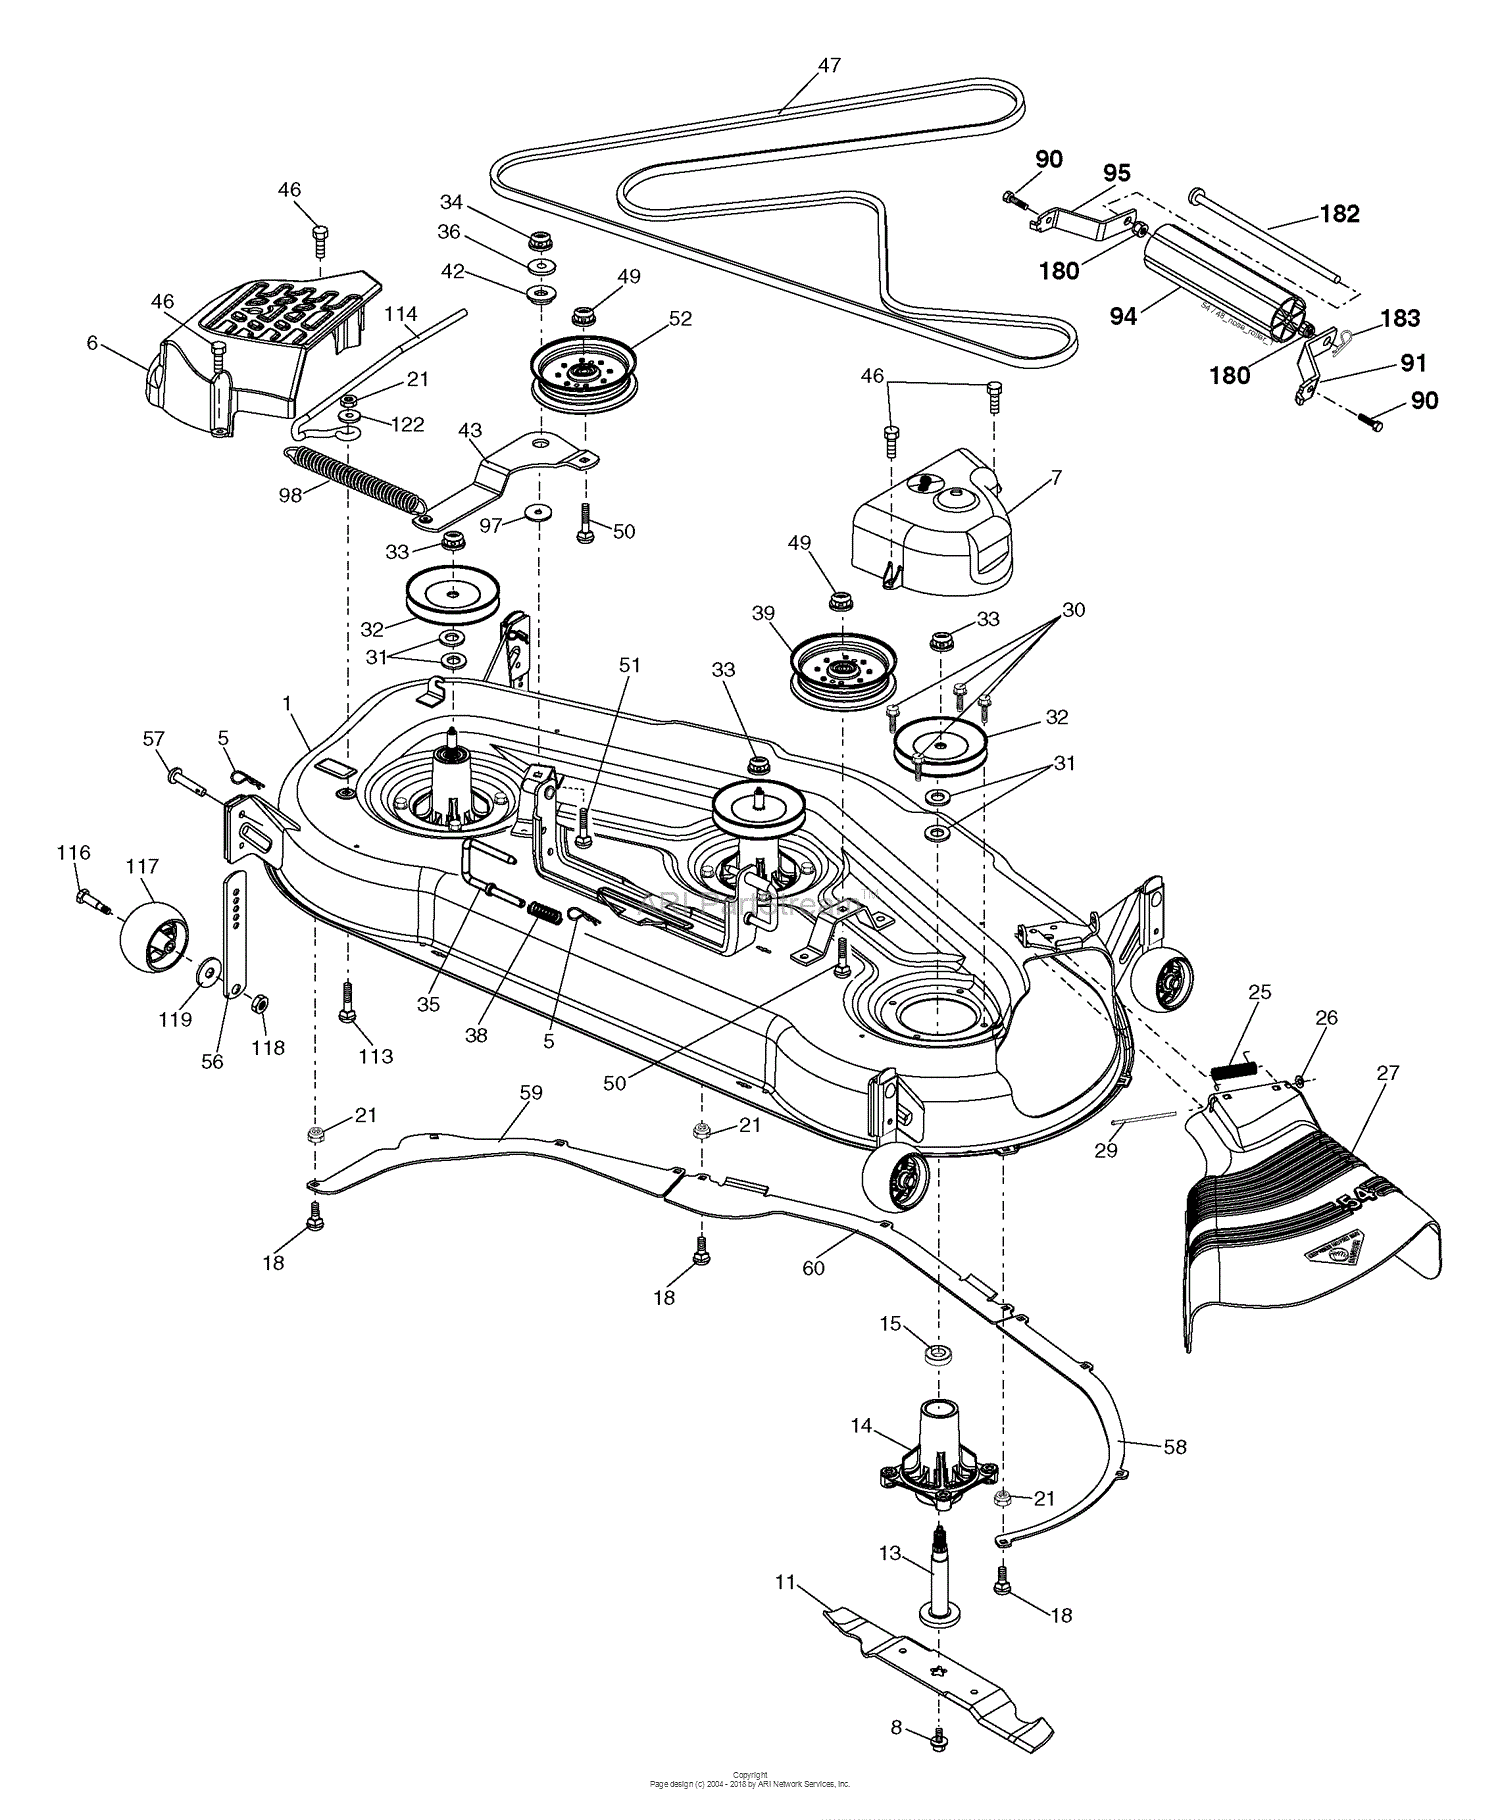 45 Husqvarna Lawn Mower Deck Diagram Modern Wiring Diagram